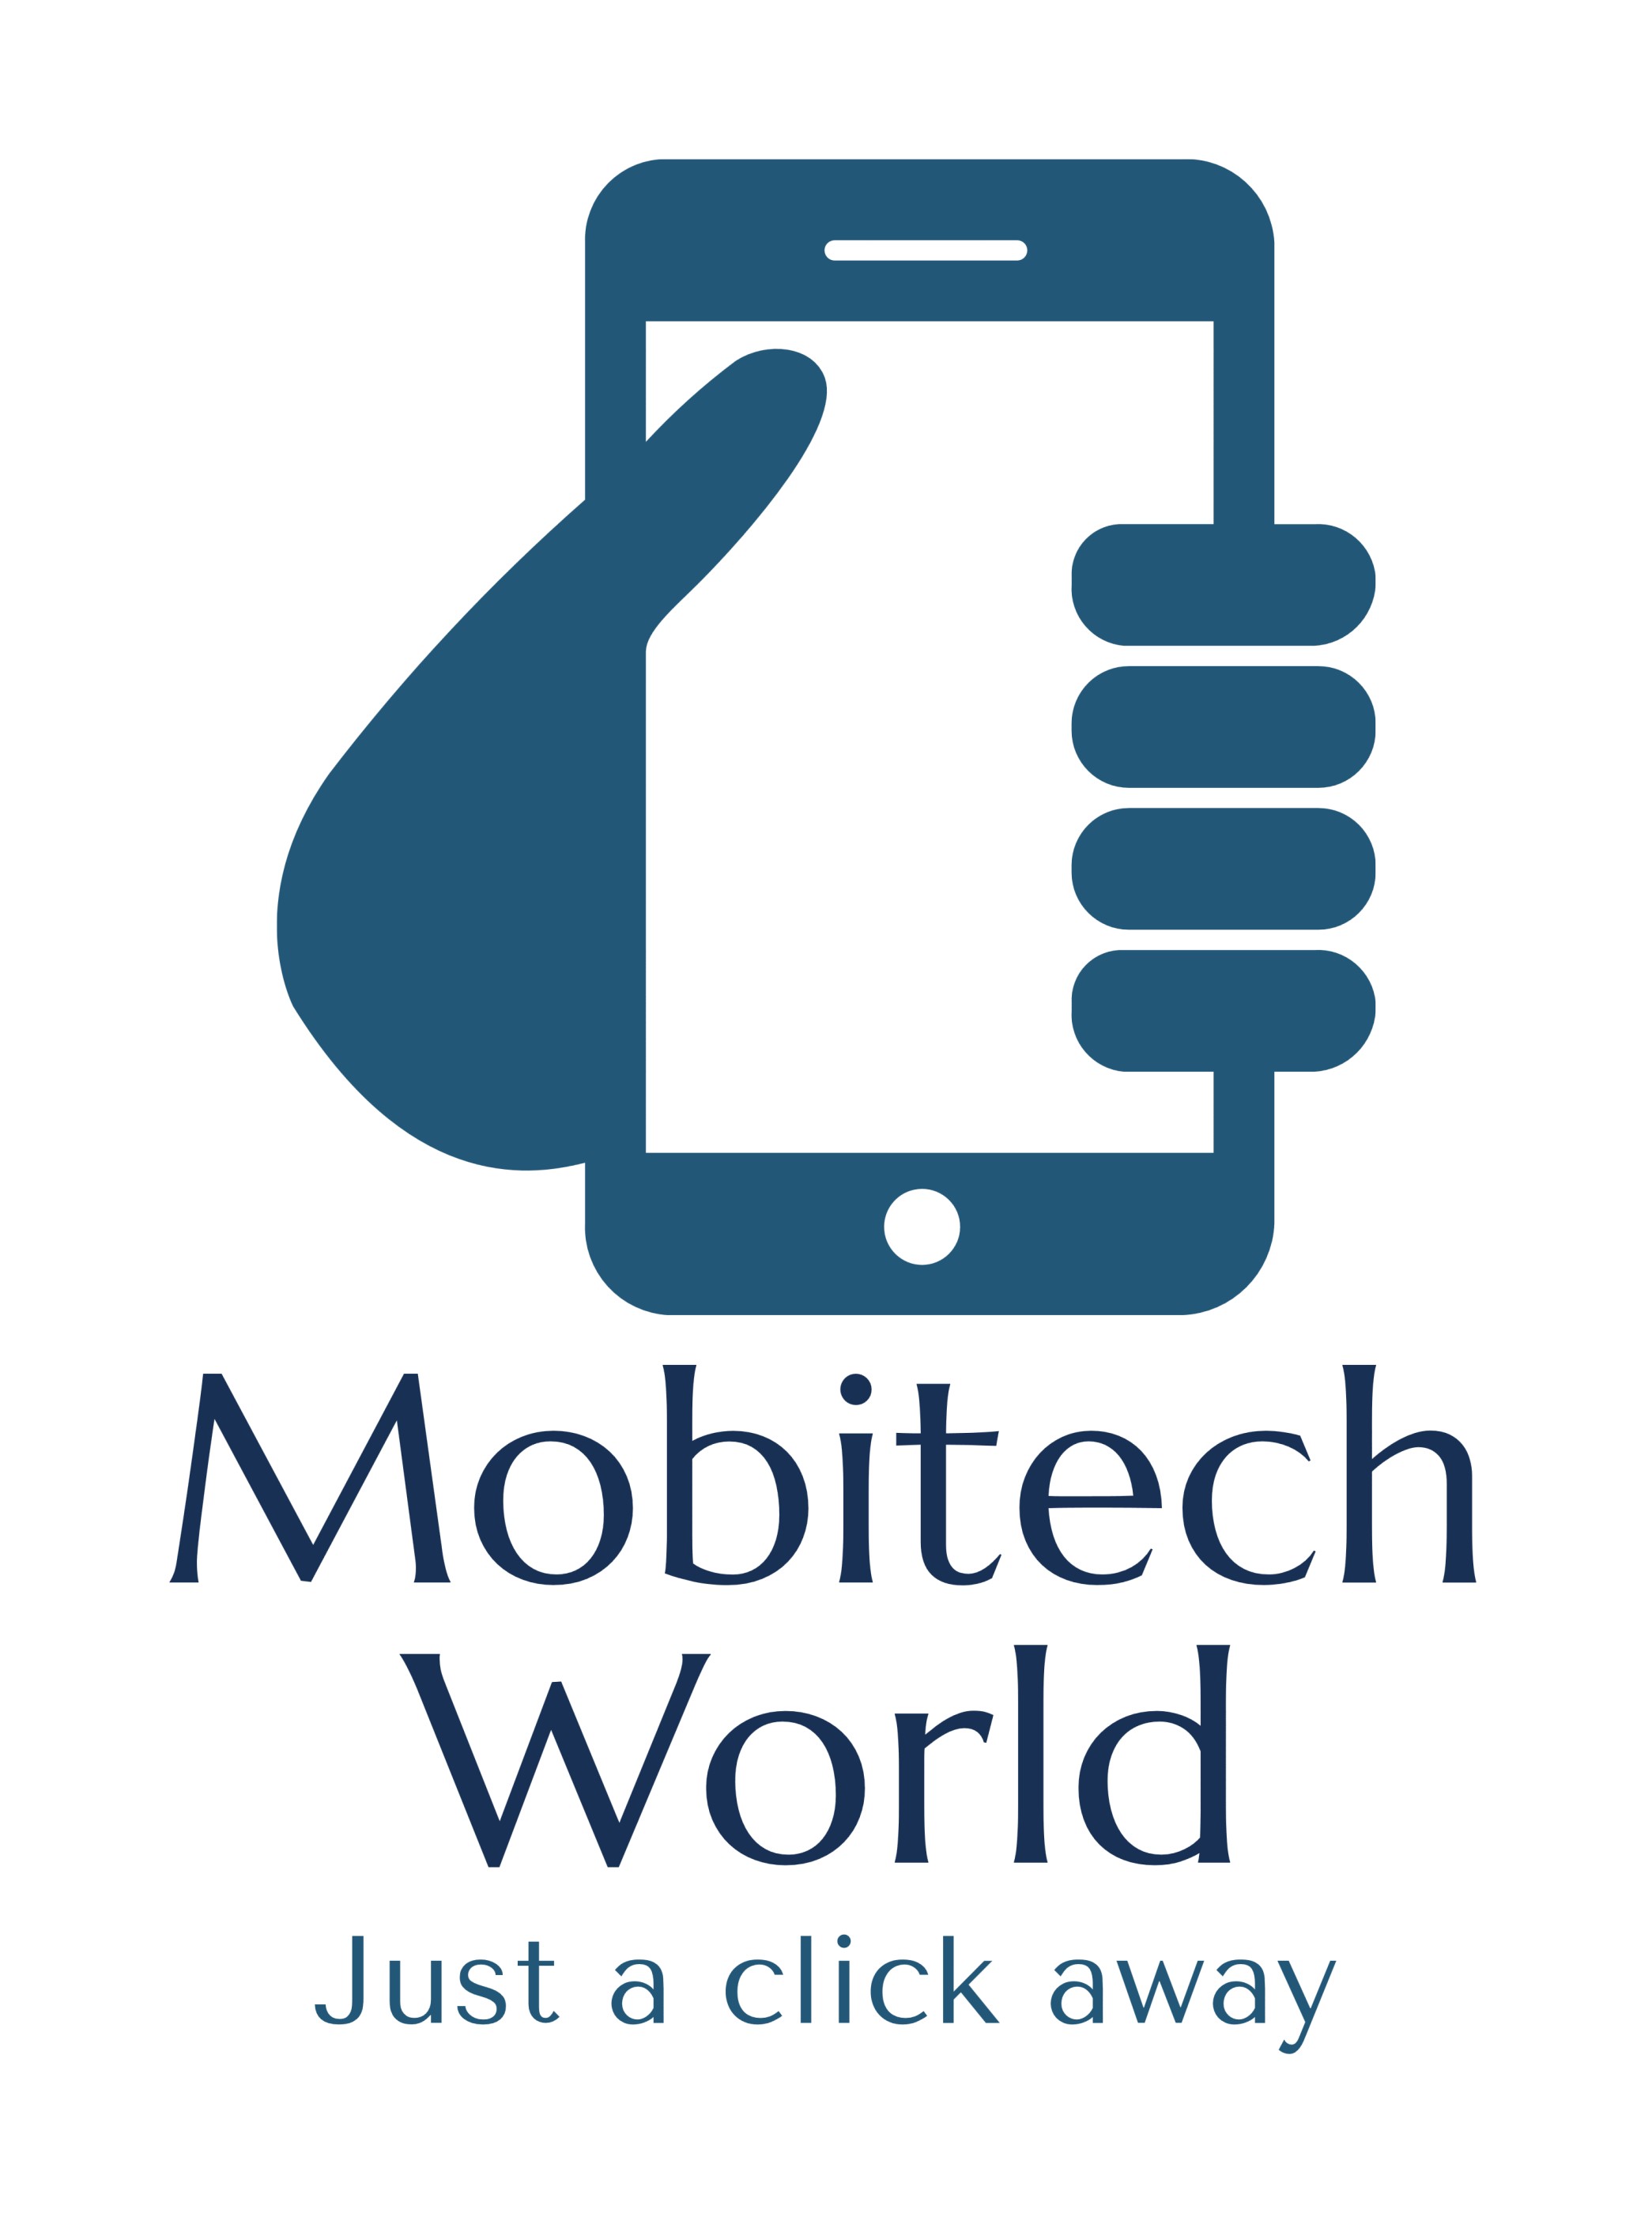 MobitechWorld